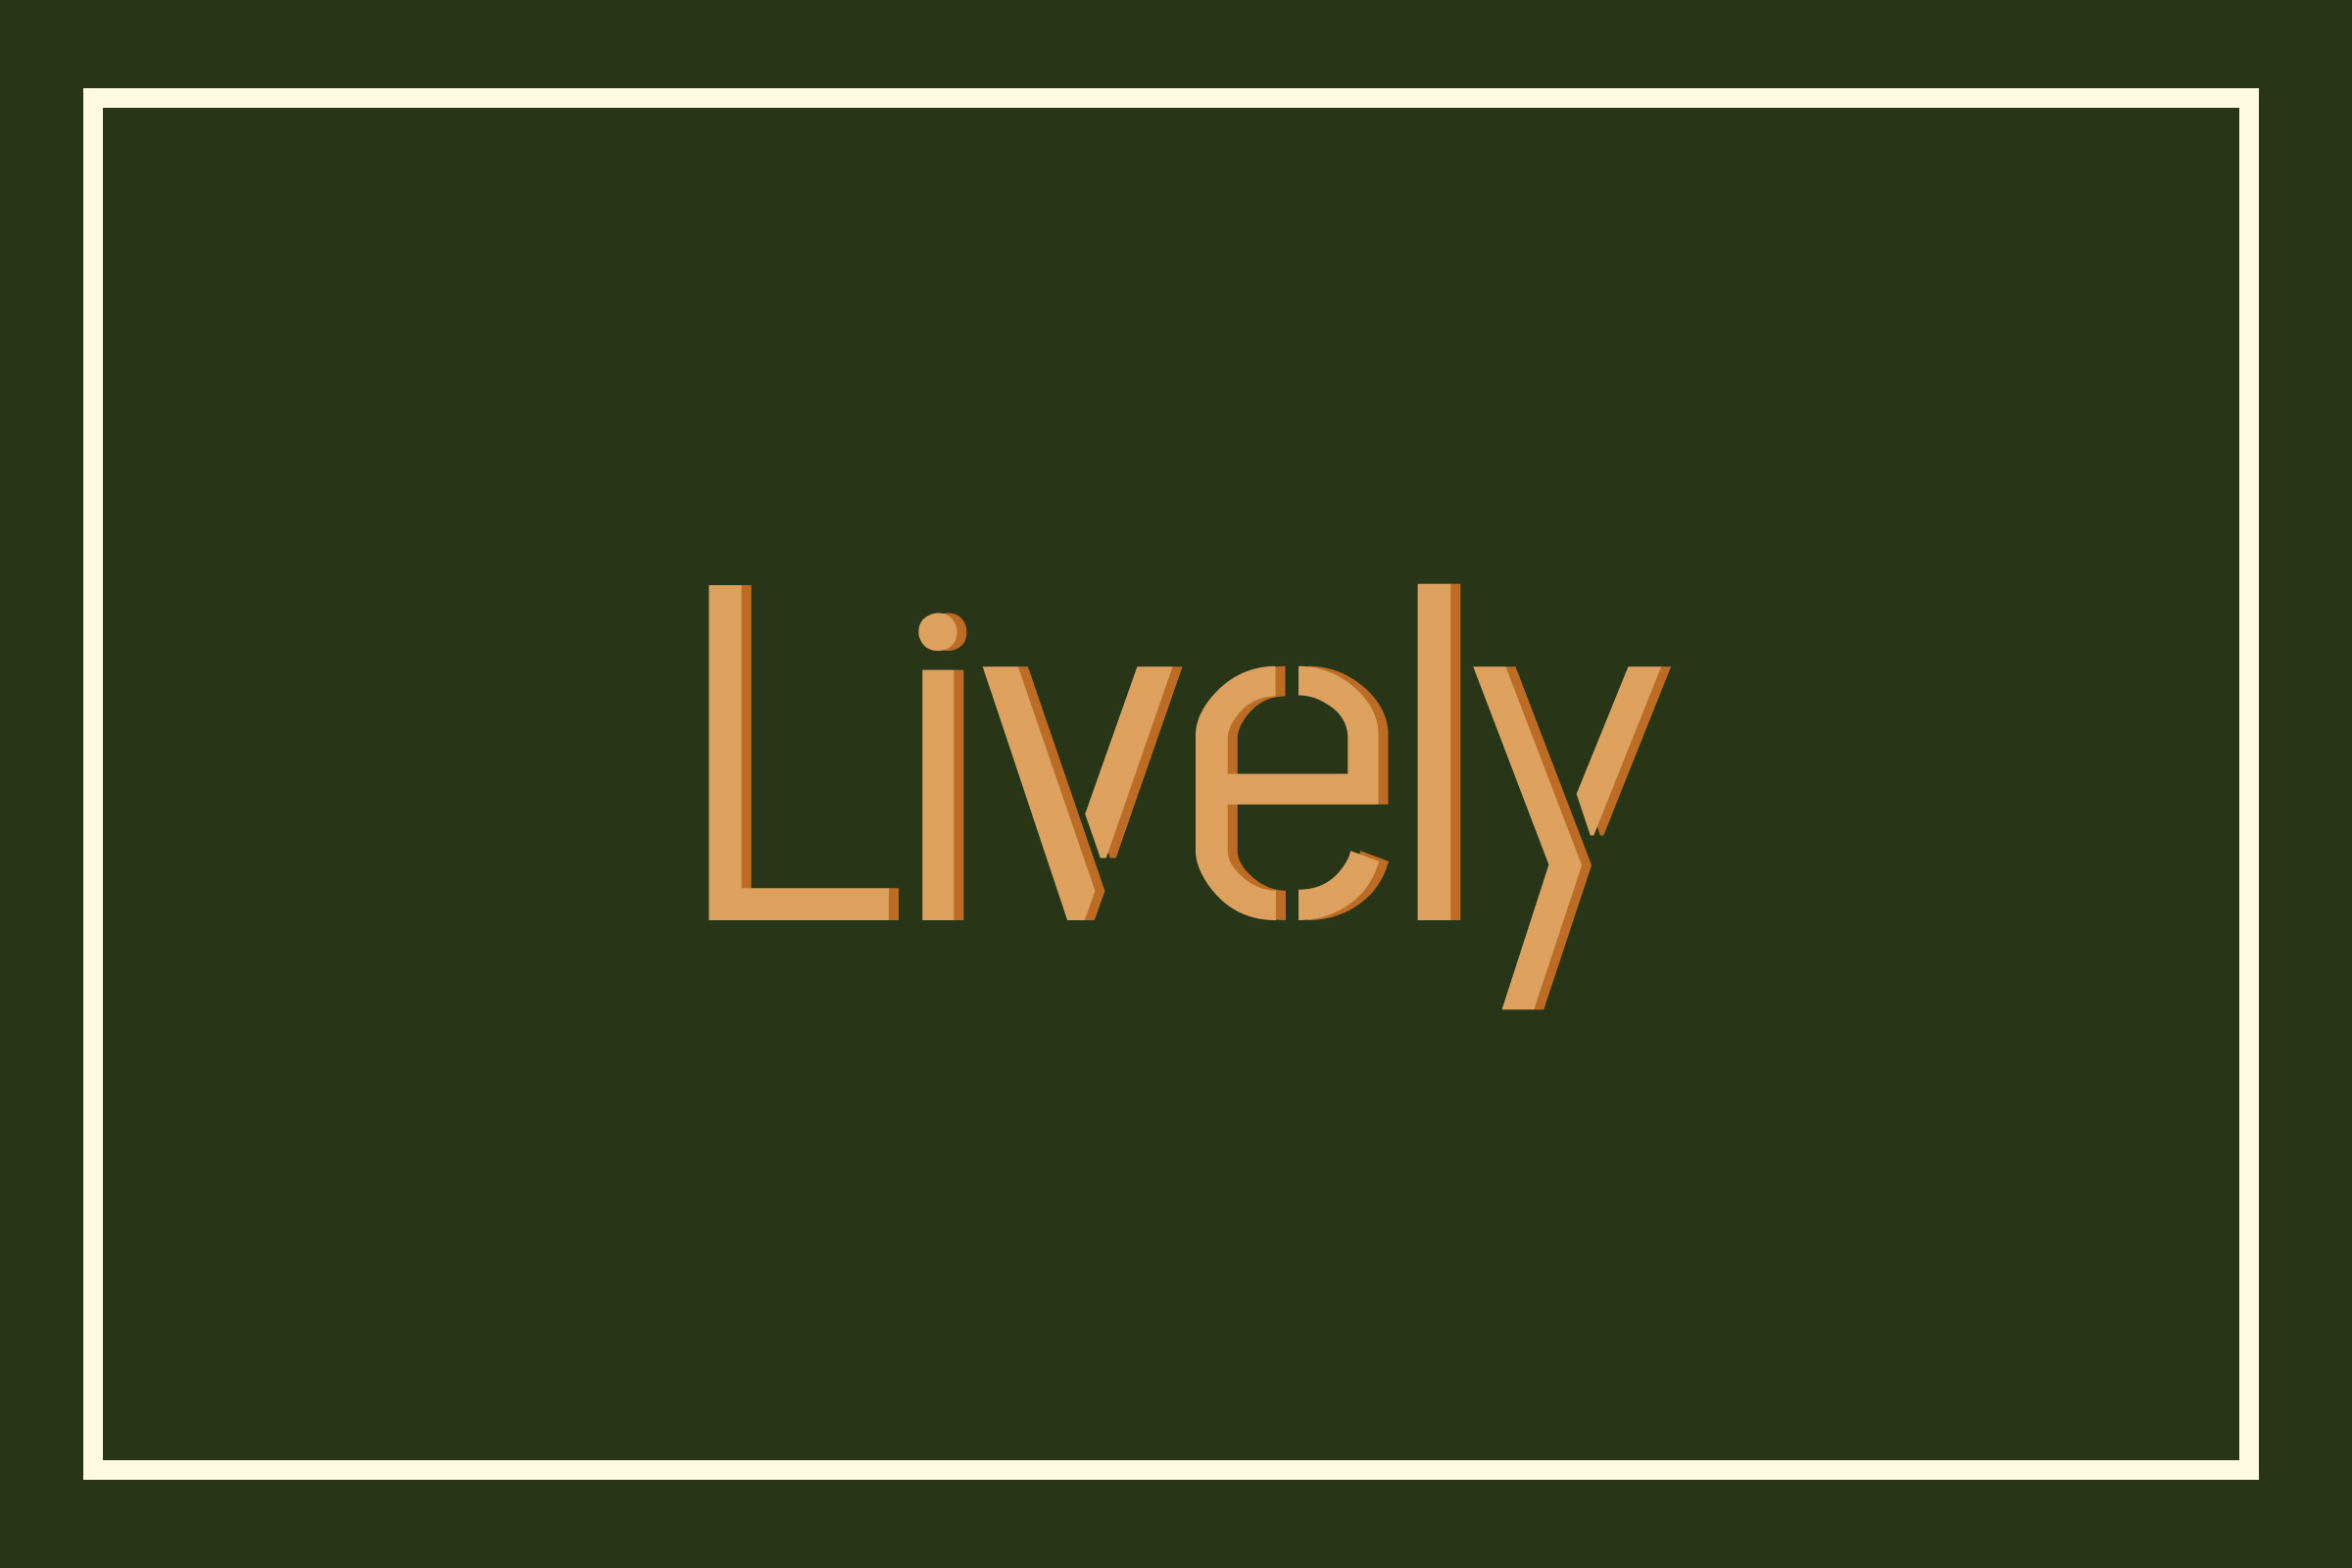 Lively project logo image